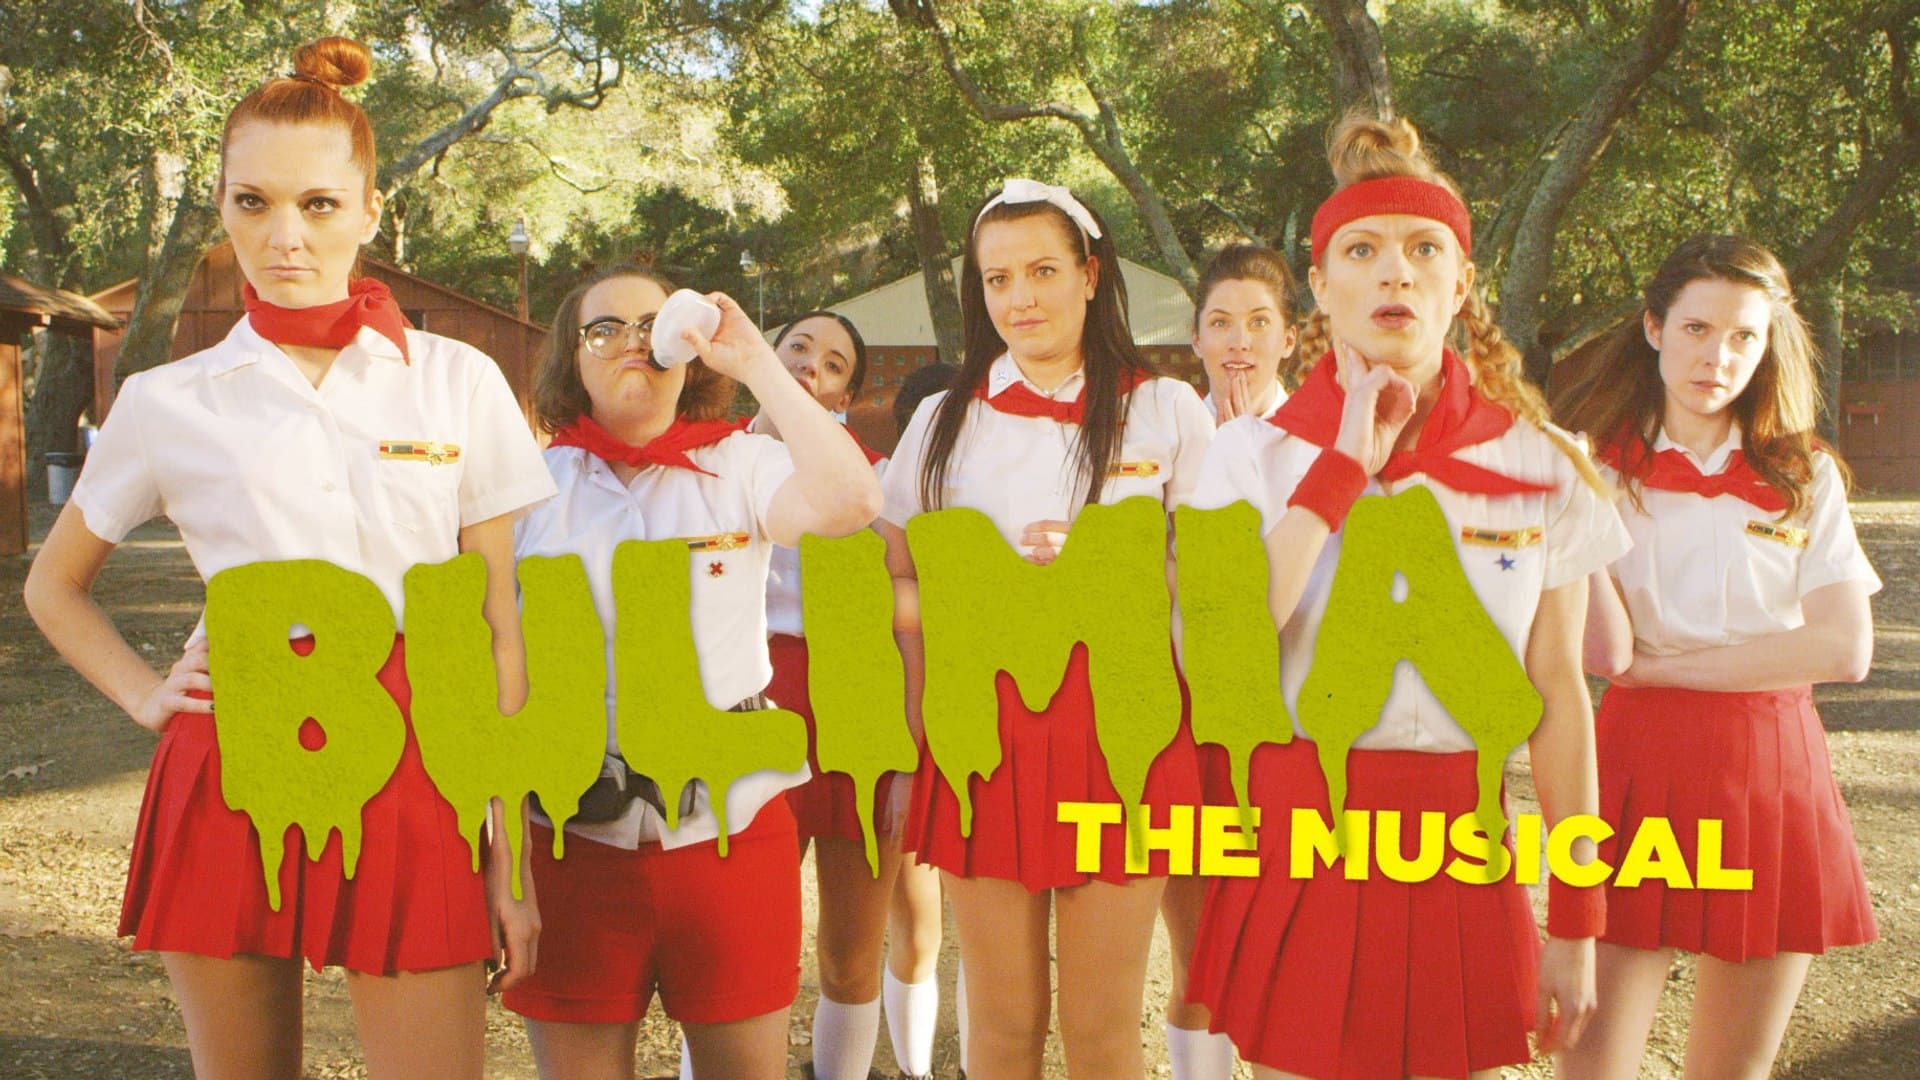 Bulimia: The Musical (2014)